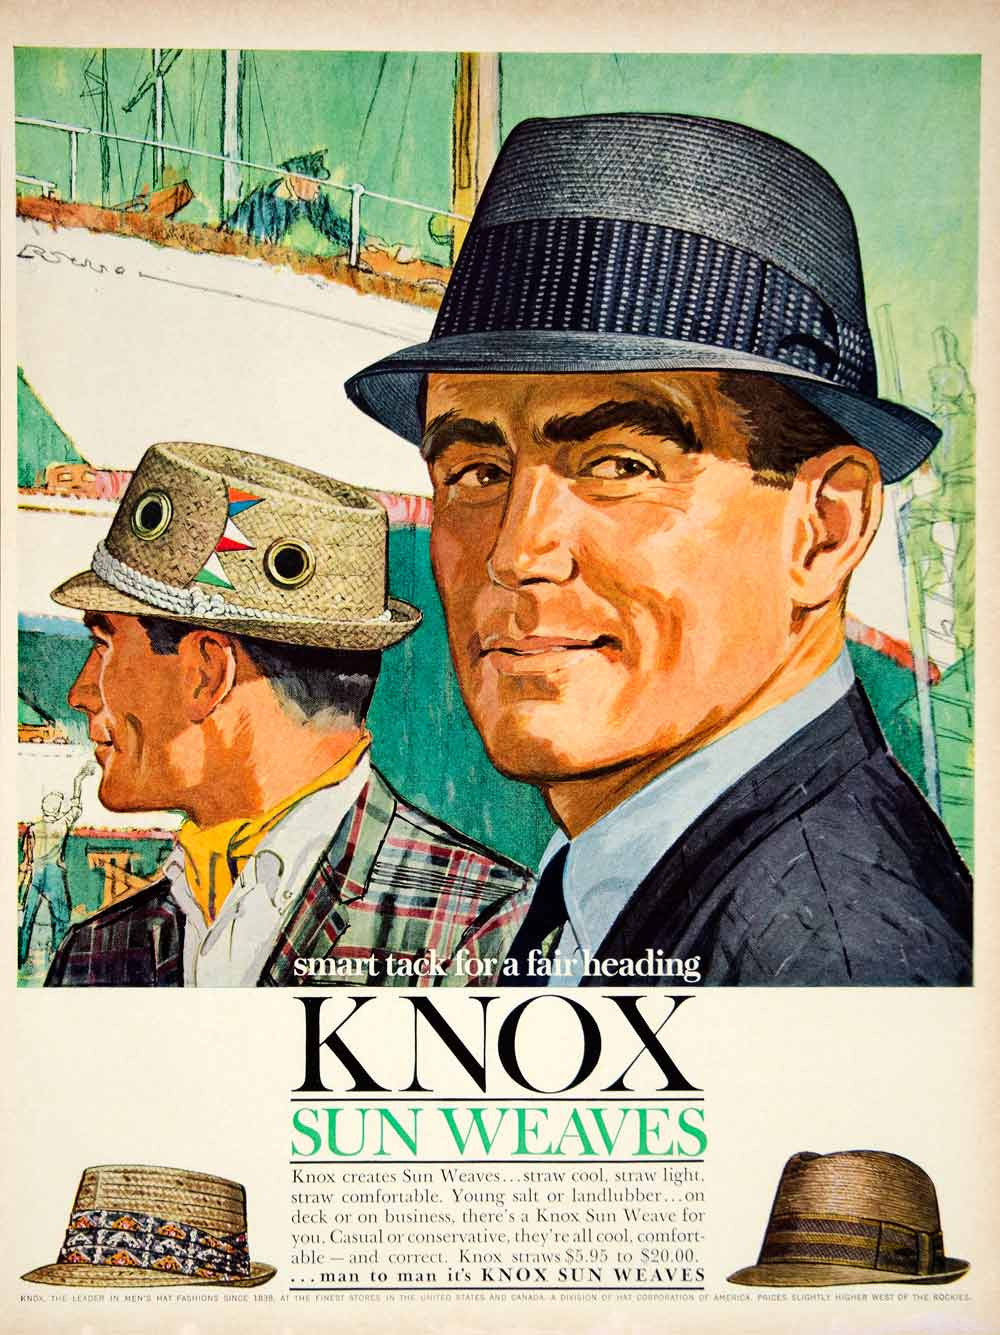 1962 Ad Vintage Knox Sun Weave Summer Hat Fashion Don Draper 60s YMM5 - Period Paper
